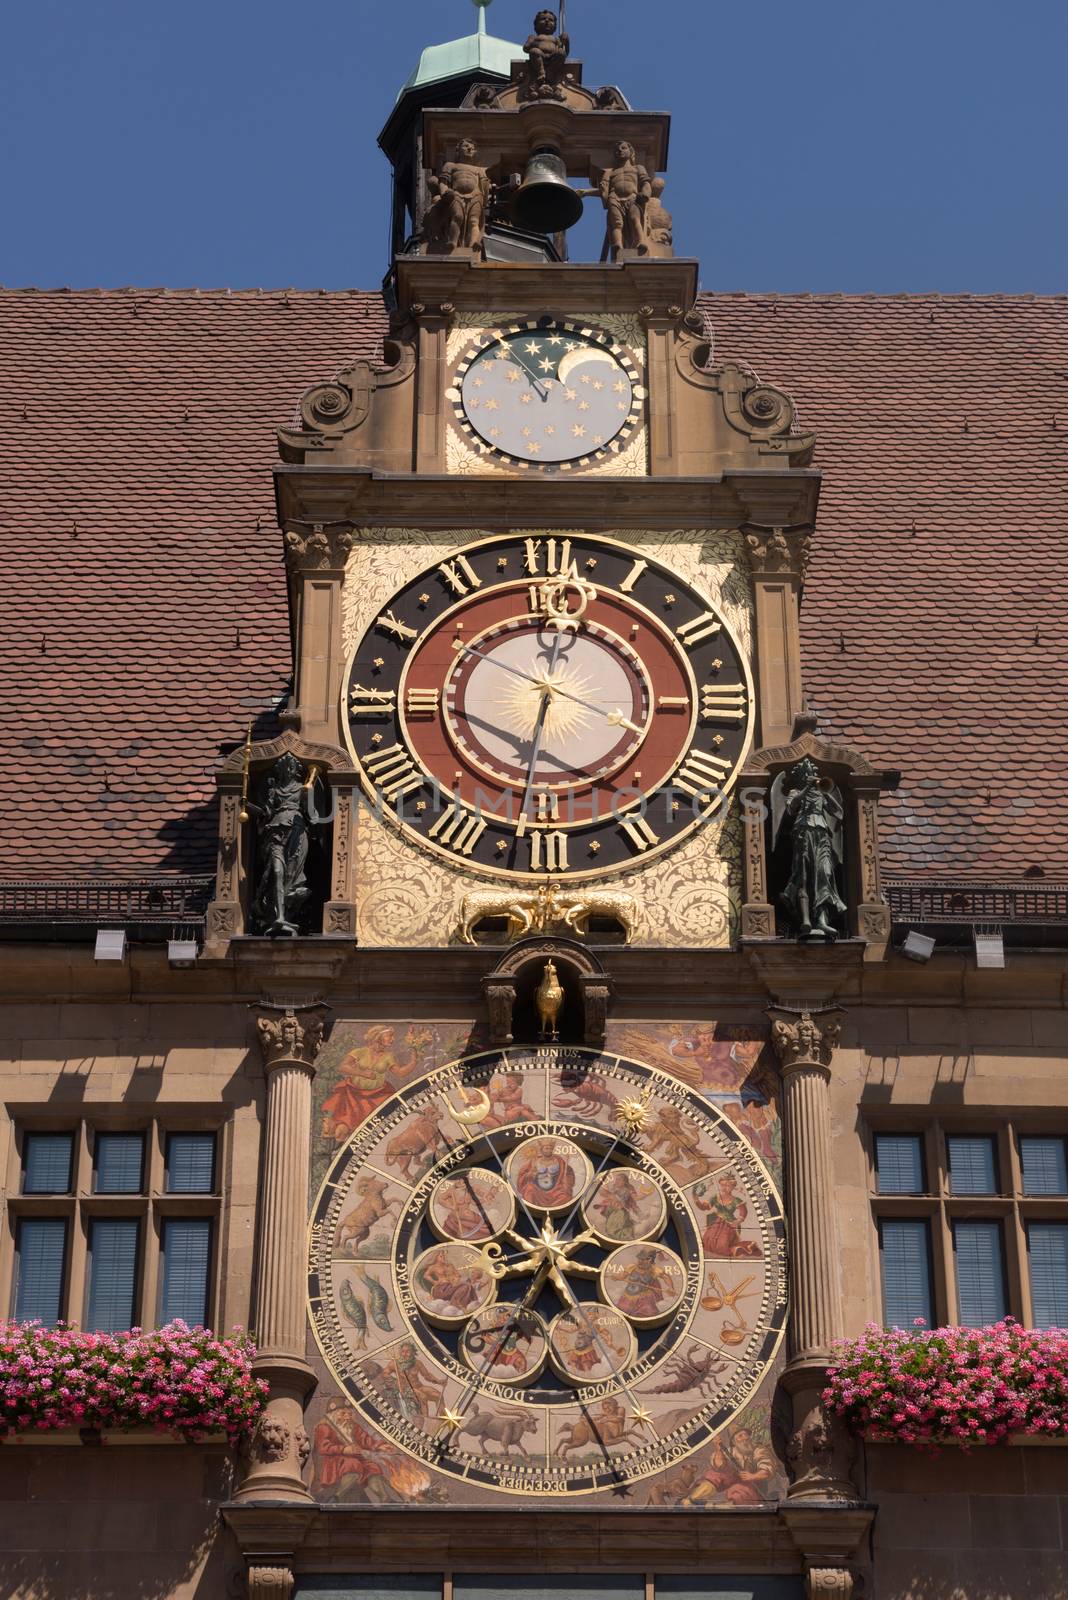 Heilbronn Astronomical clock by pomemick